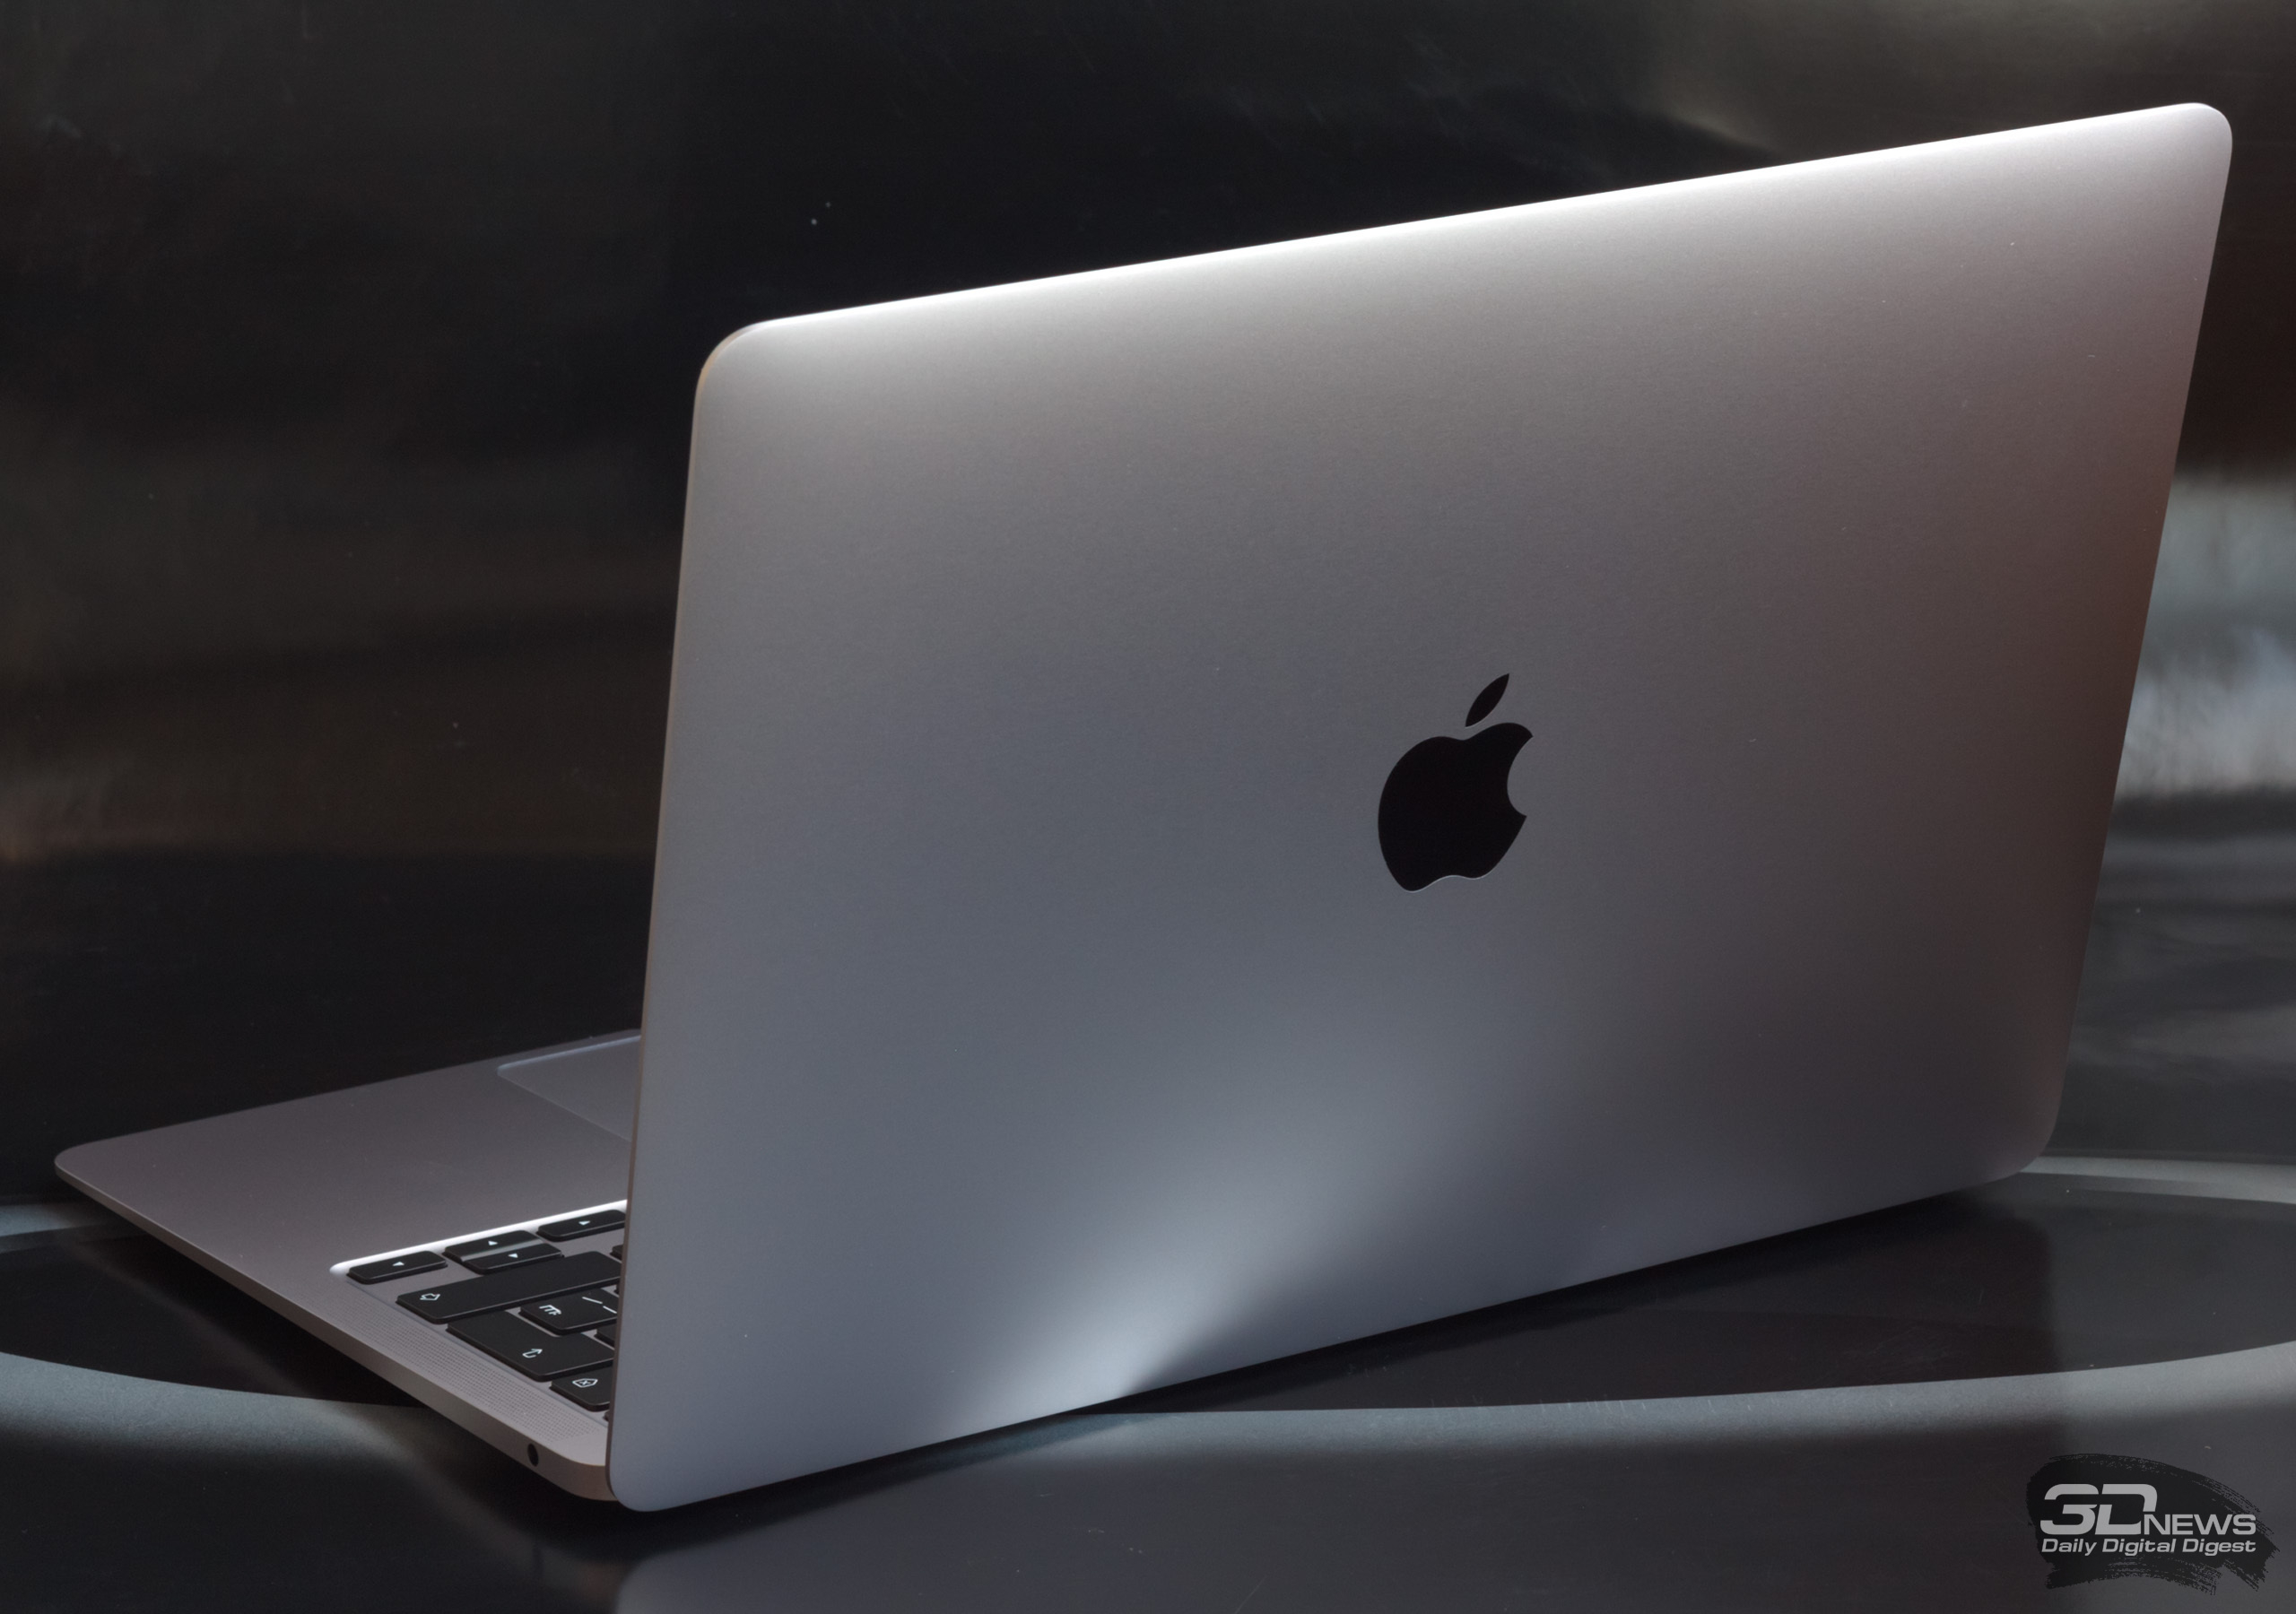 Ноутбук Apple Macbook Air 13 Цена